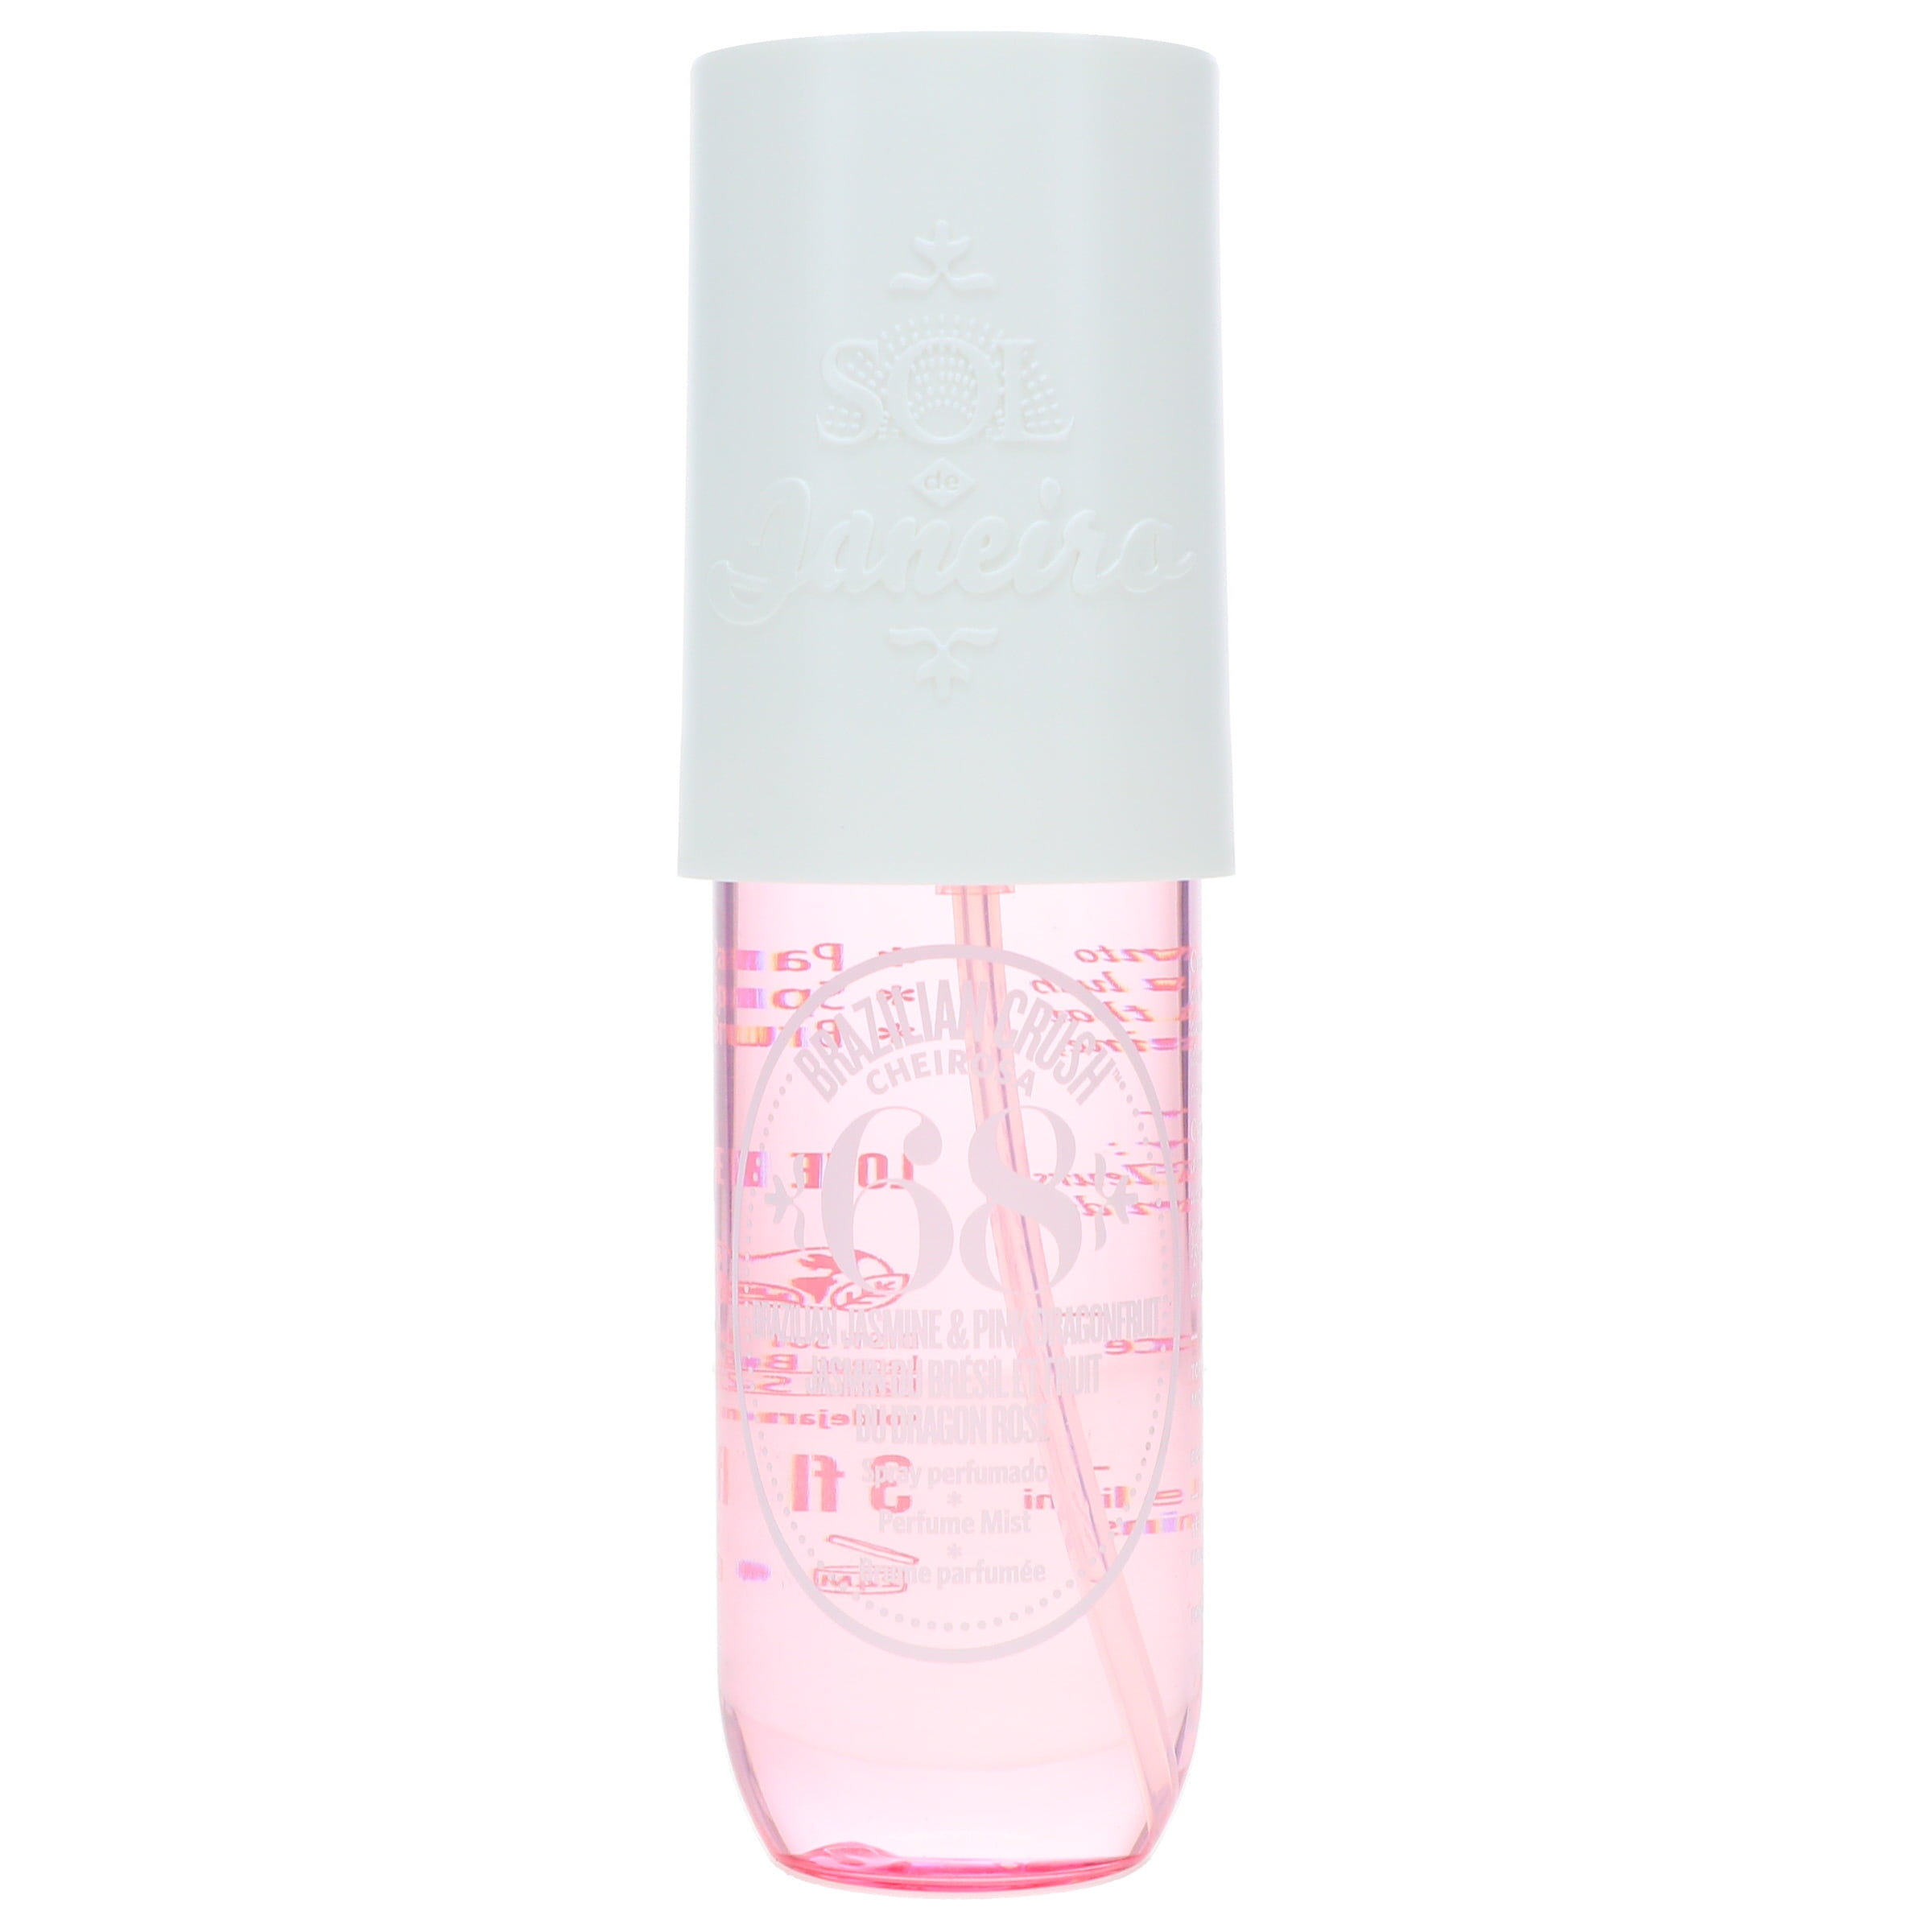 Sol De Janeiro Brazilian Crush Cheirosa 68 Perfume Mist Spray - Brazilian  Jasmine & Pink Dragonfruit 240ml/8oz